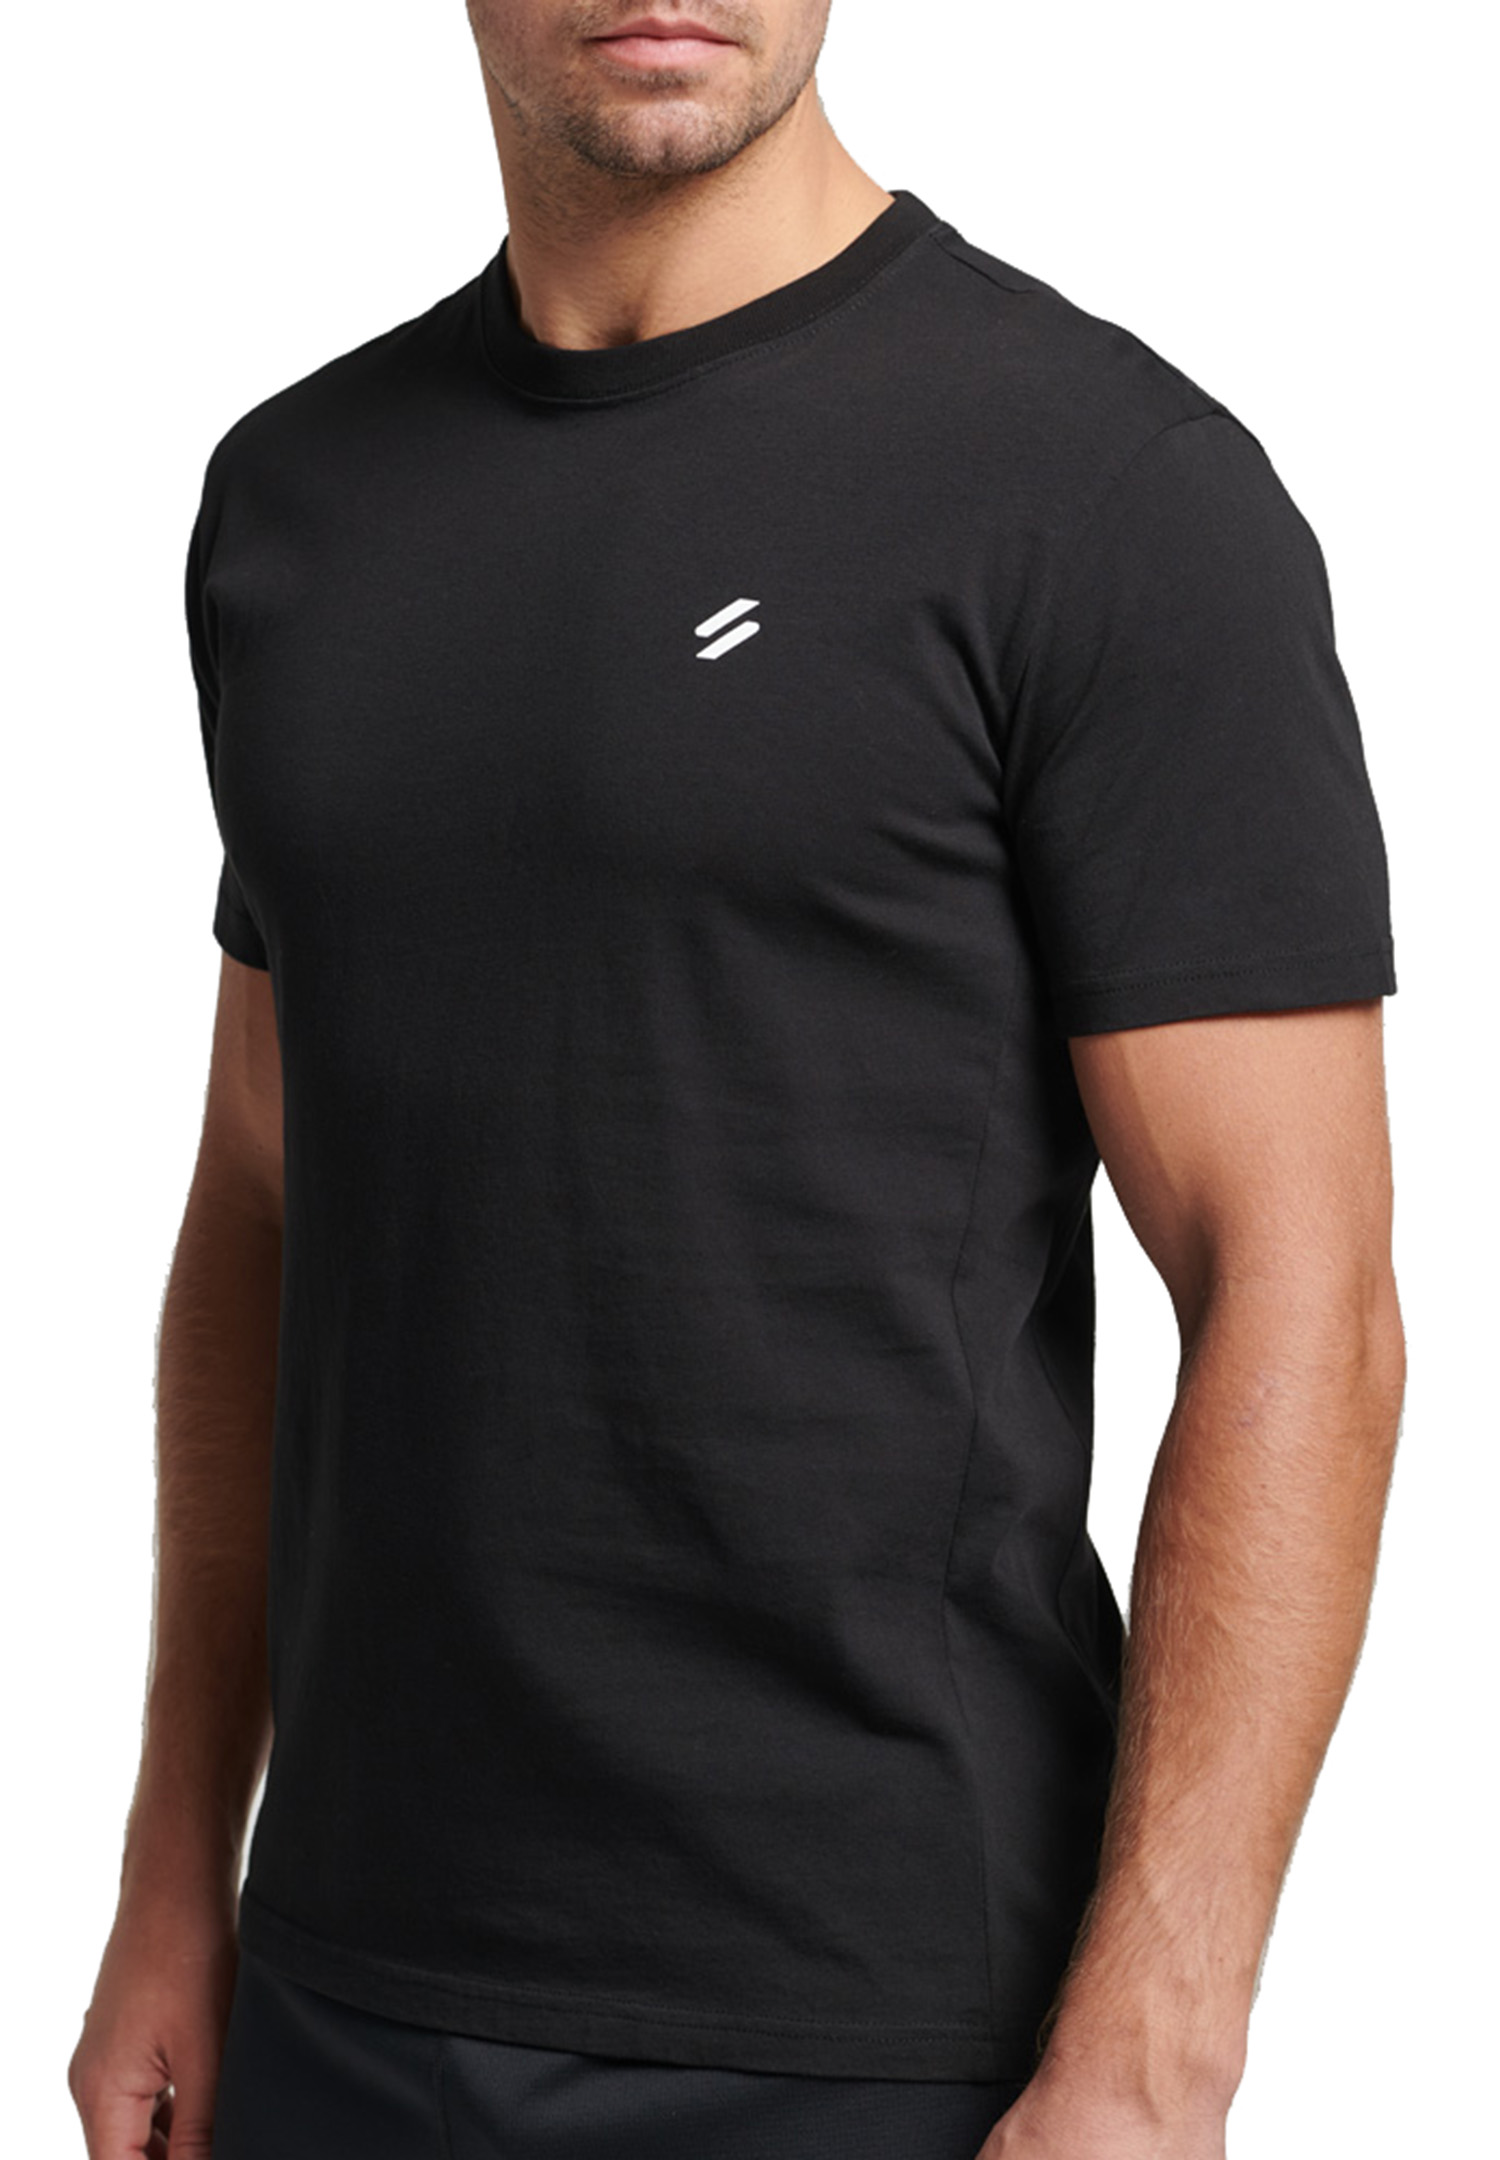 Superdry Core Loose Sort Sleeve Tee T-Shirt Herren Shirt MS311304A schwarz von Superdry